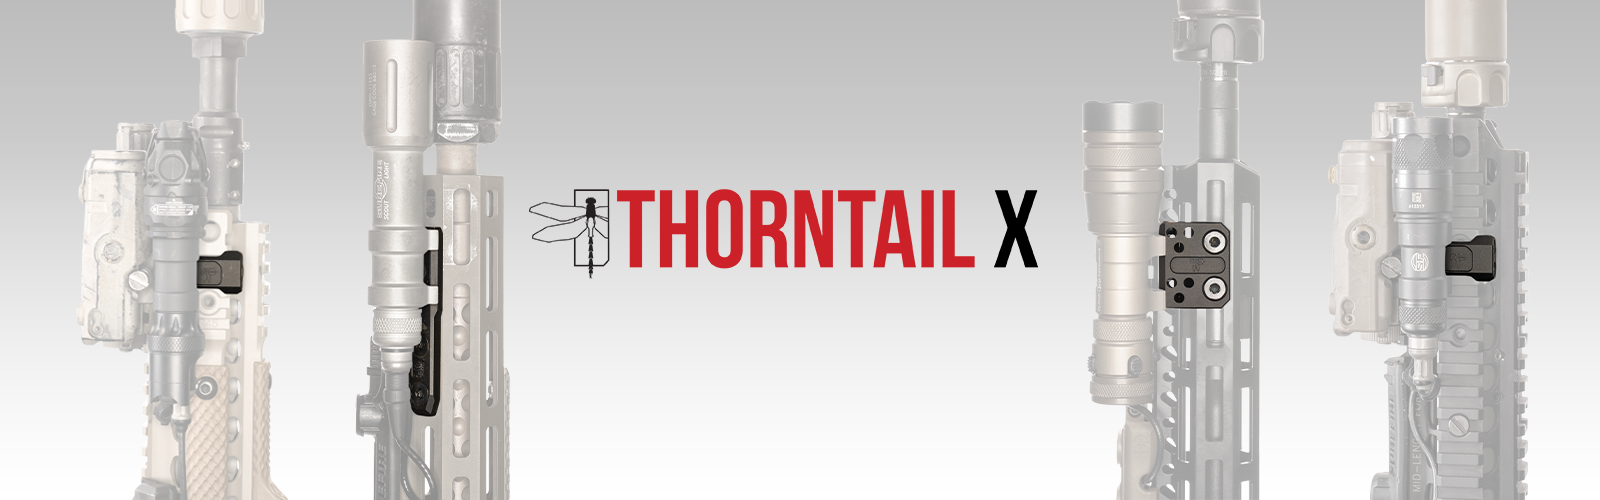 Thorntail X